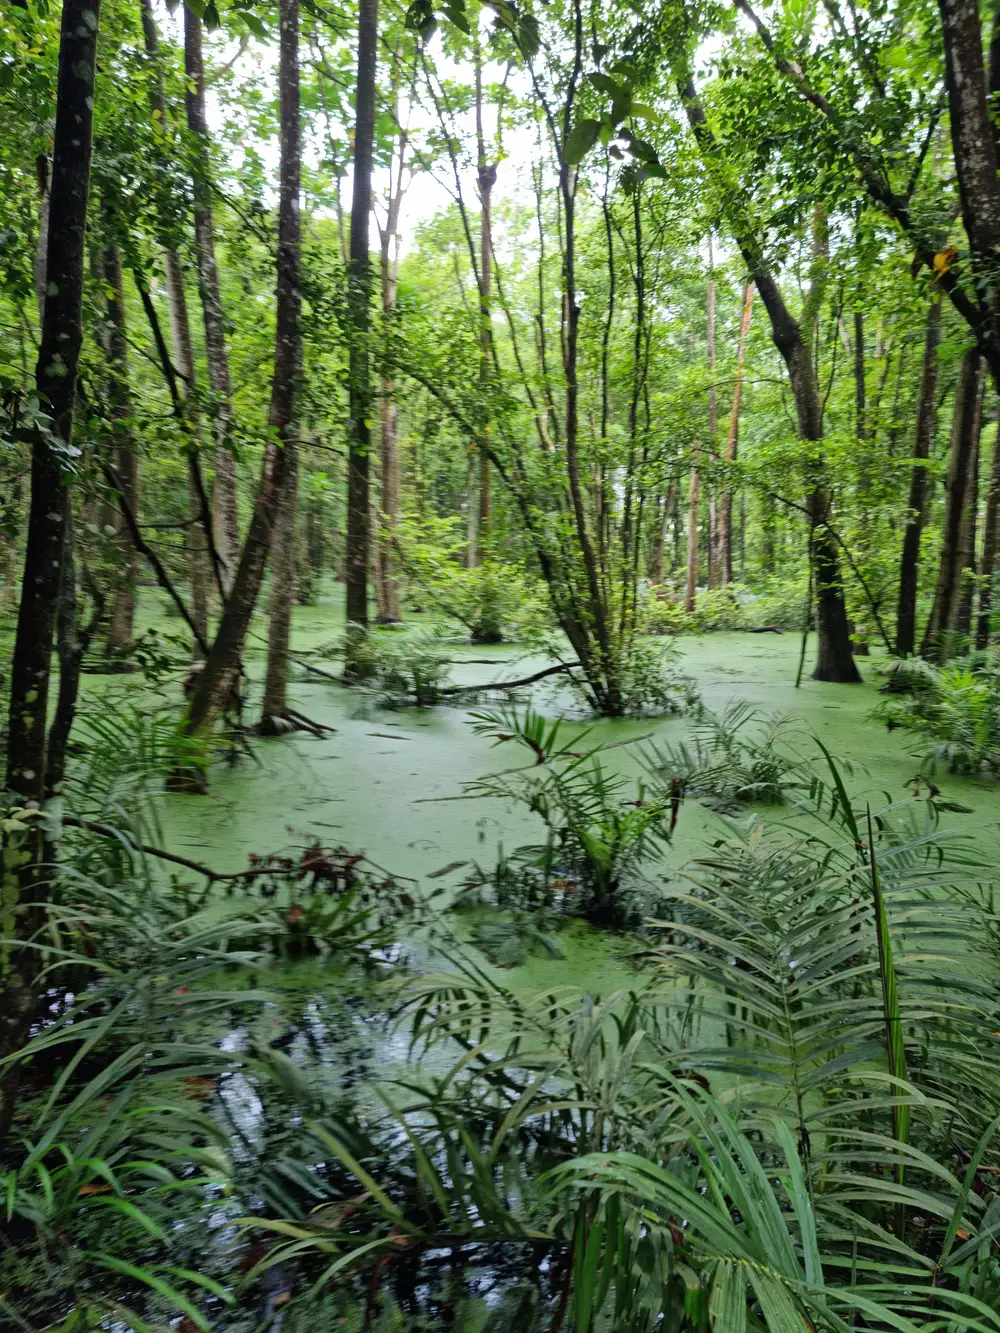 A Swamp